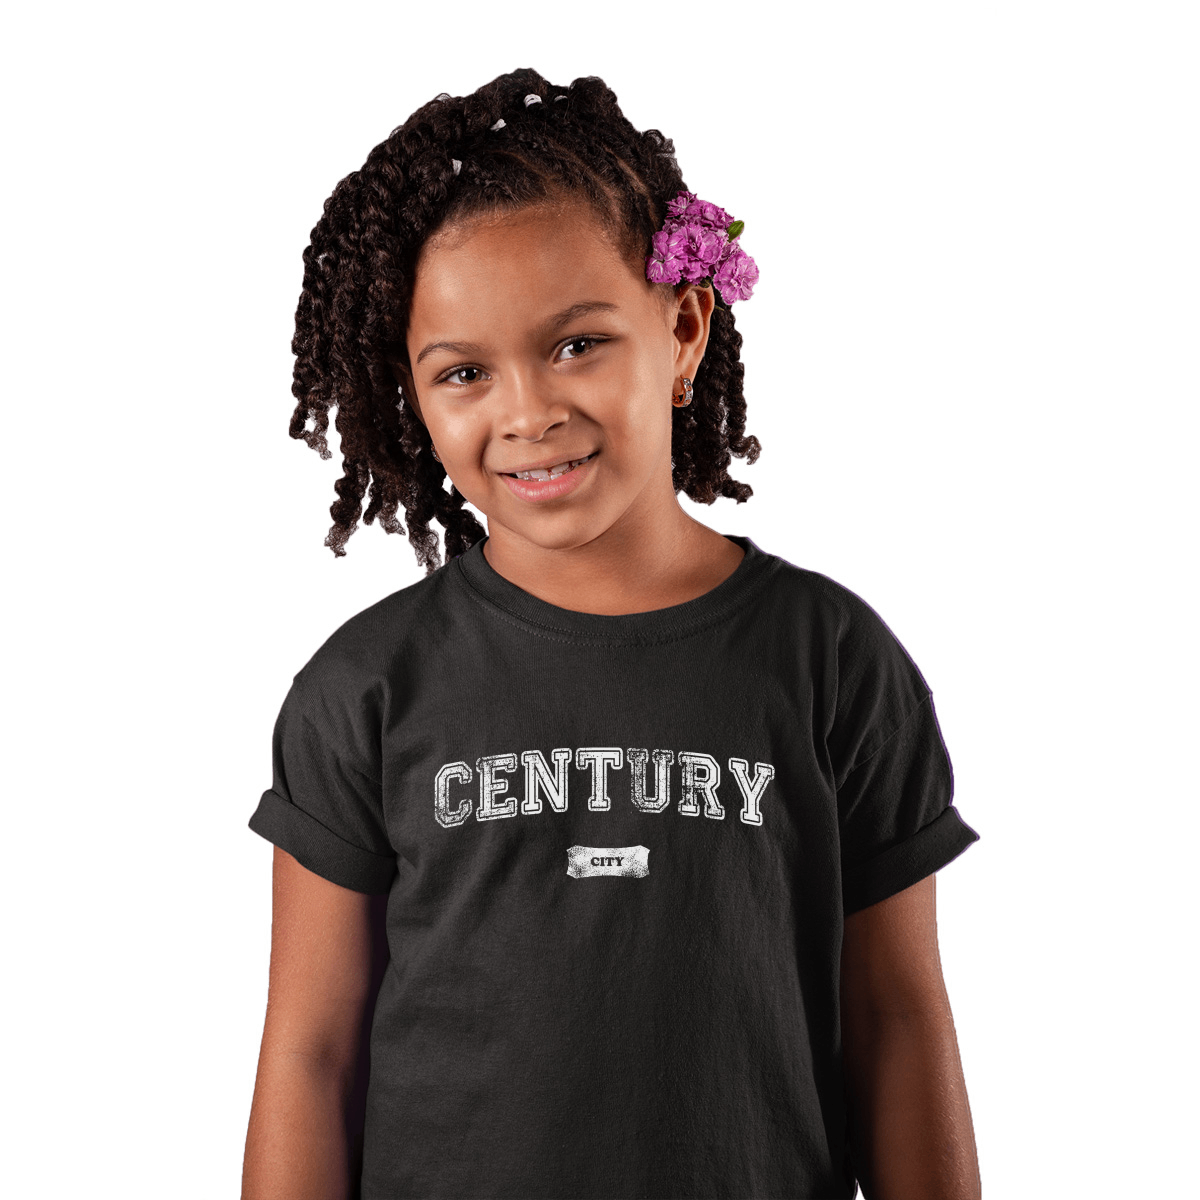 Century City Represent Kids T-shirt | Black